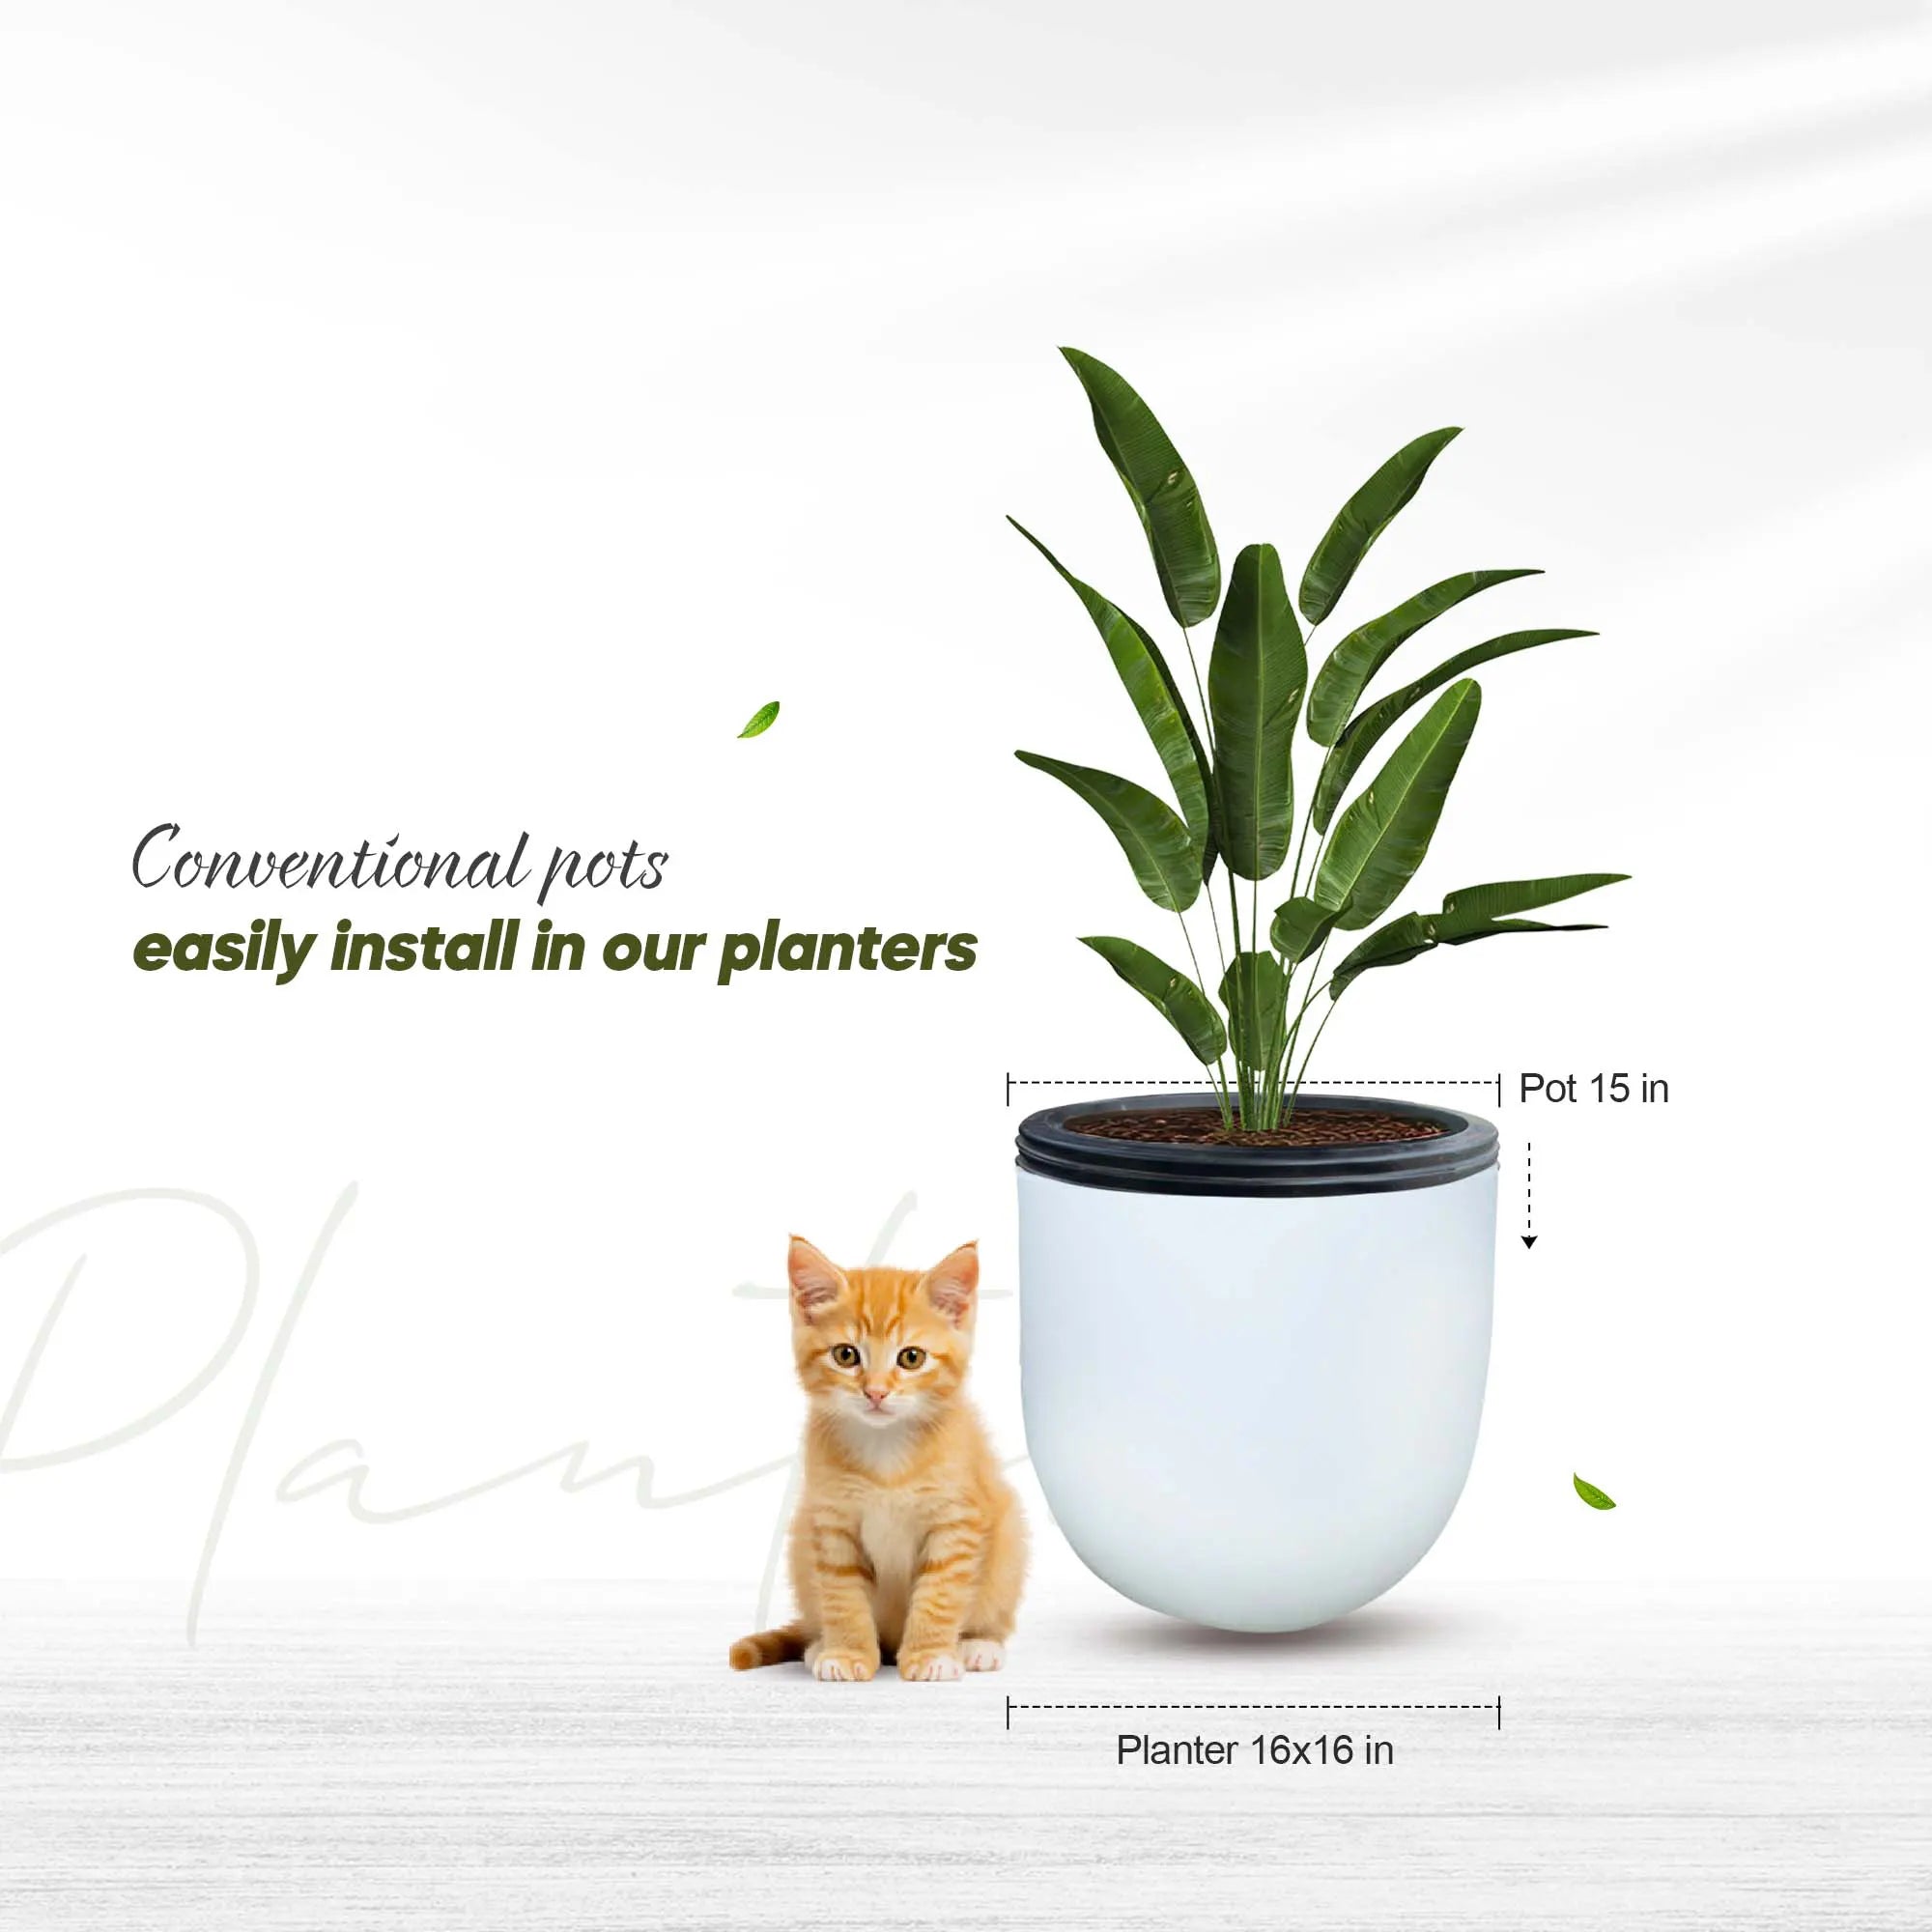 Fiberglass Planter-Medium